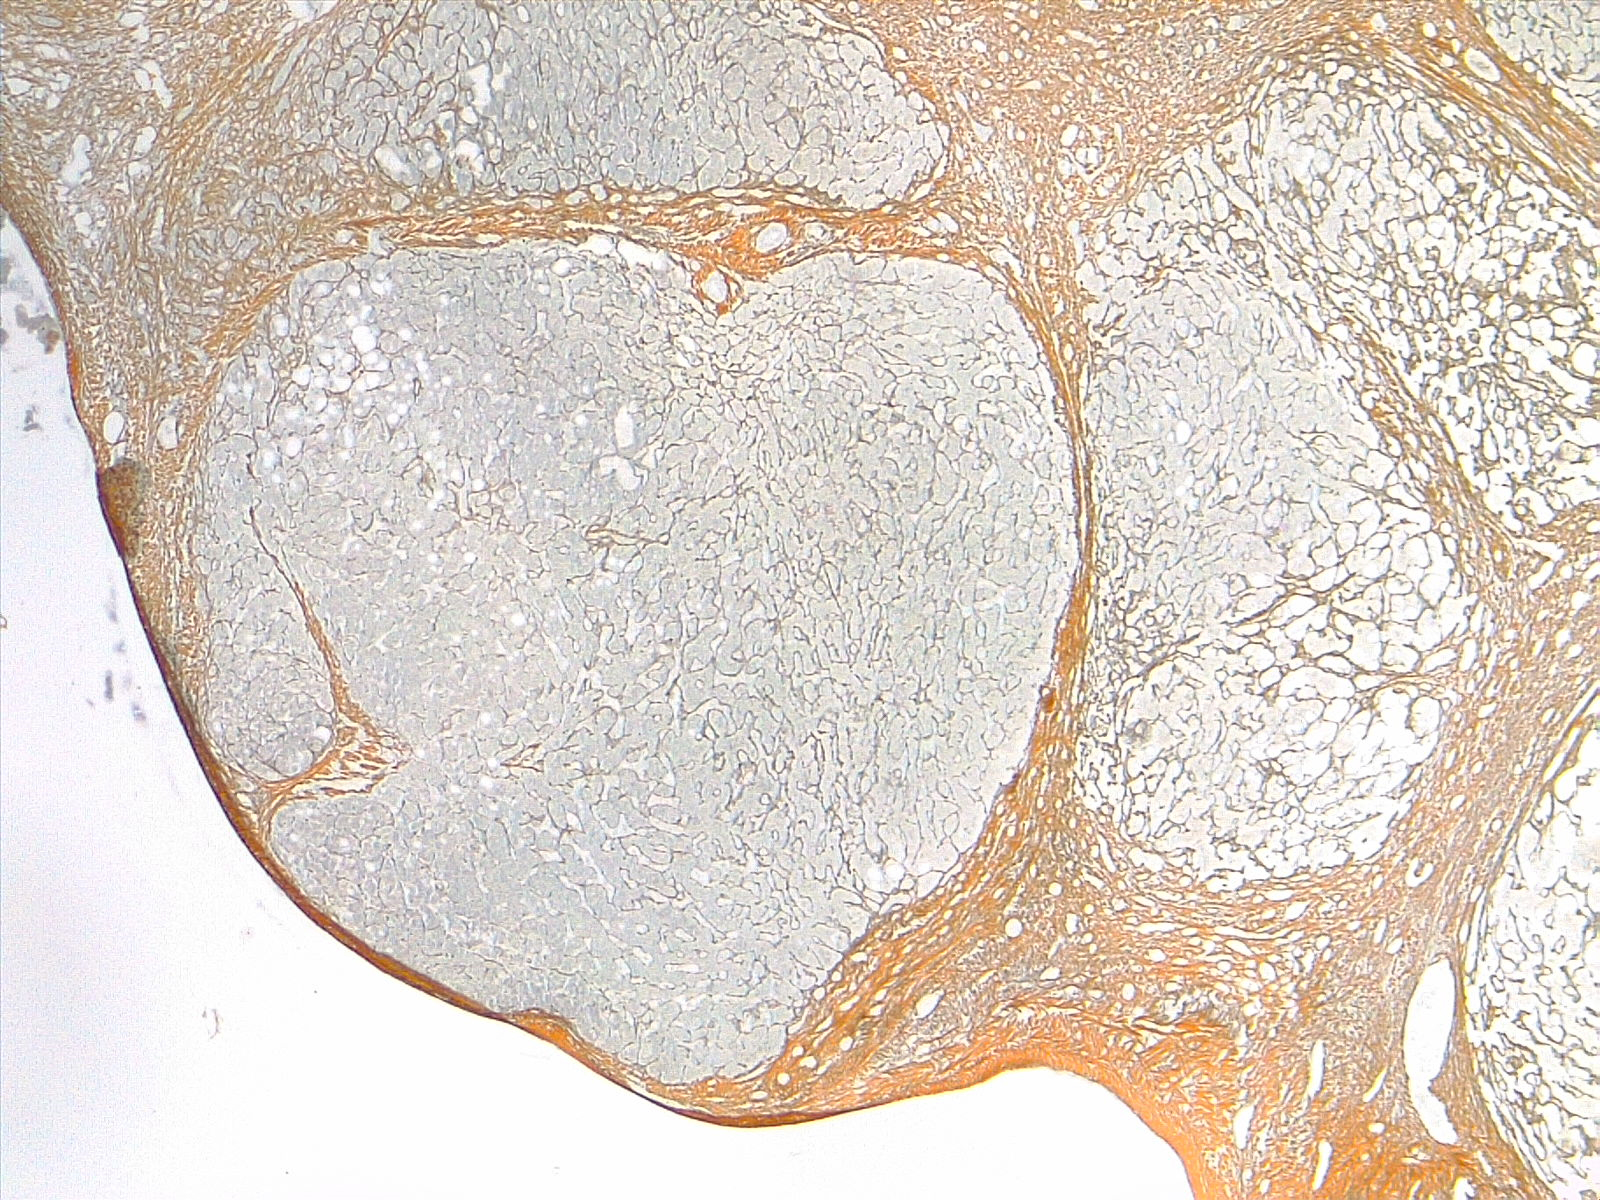 Liver cirrhosis, reticulin stain 4x